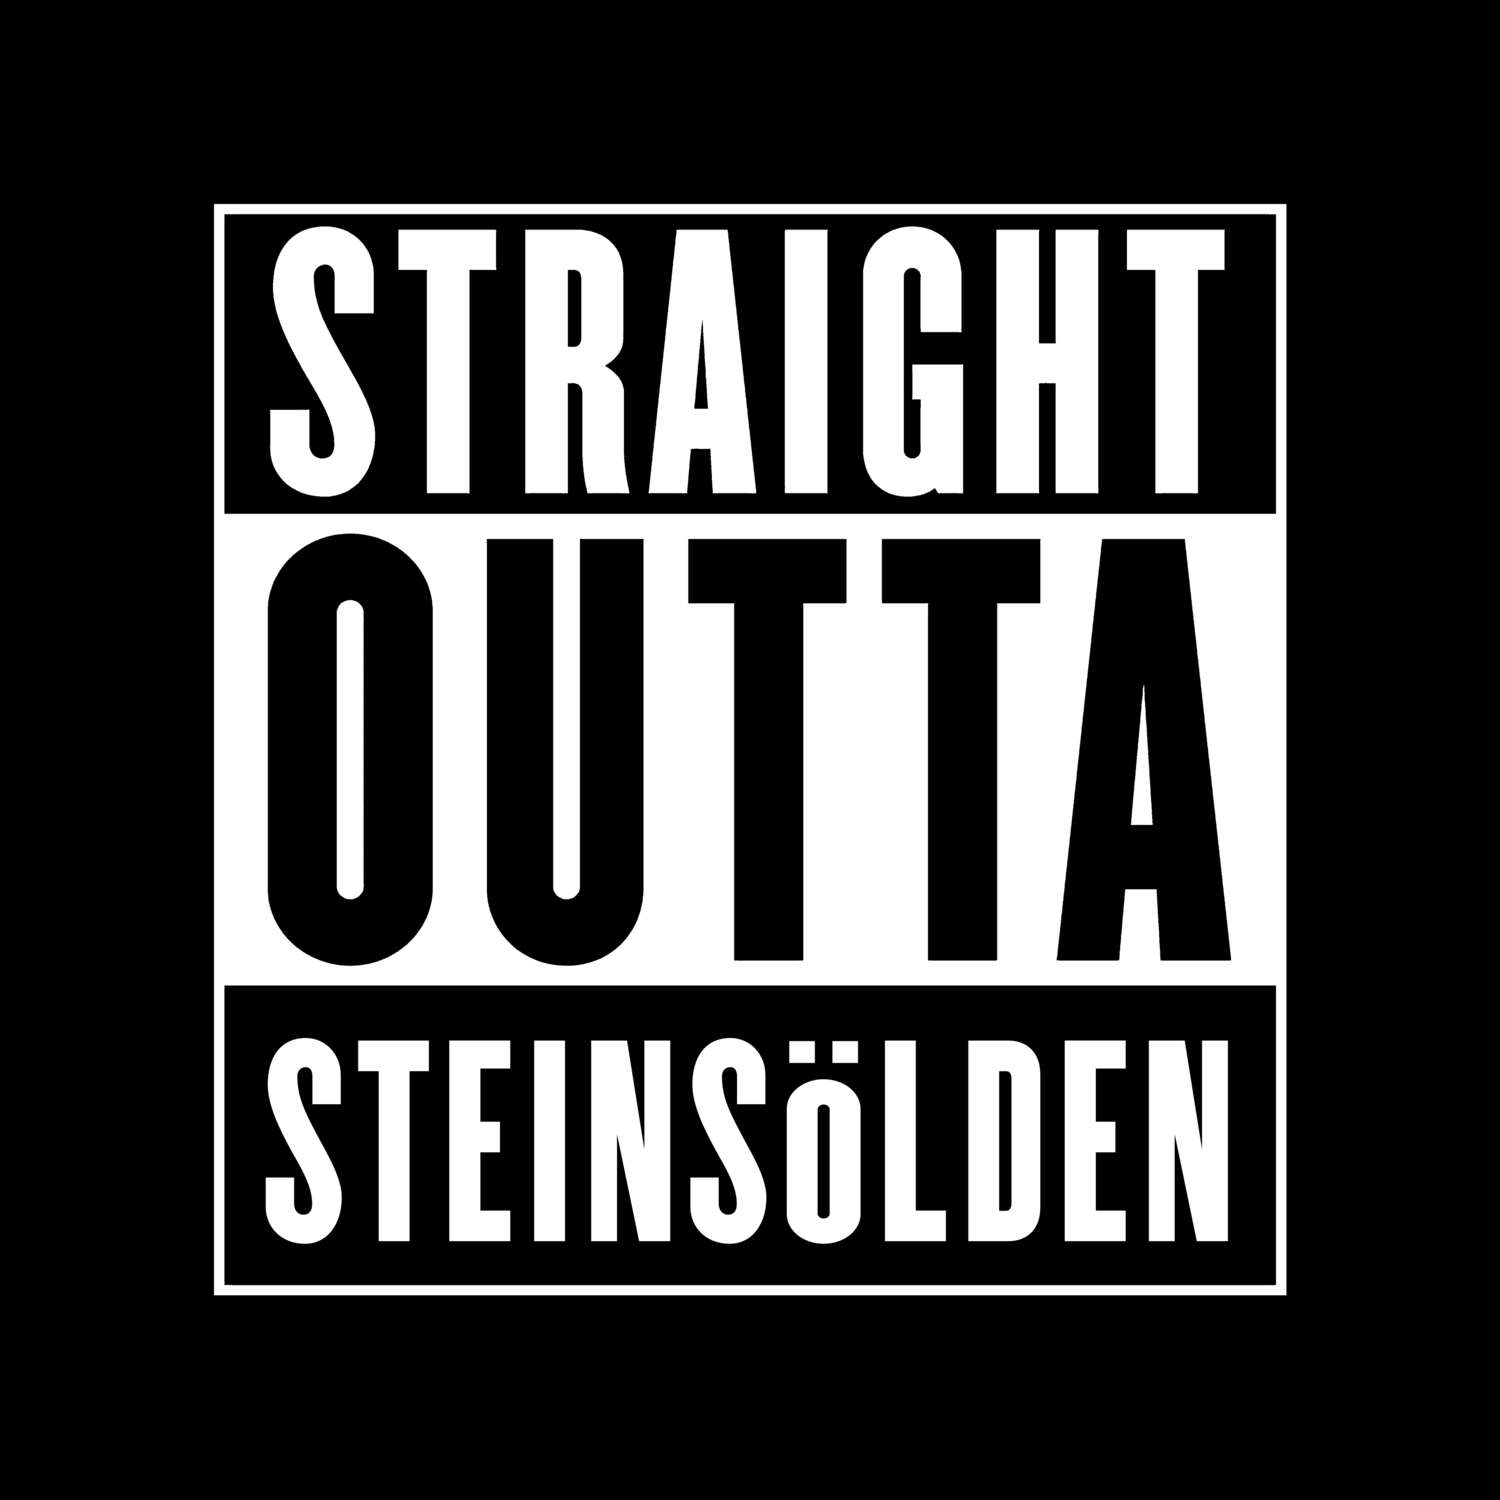 Steinsölden T-Shirt »Straight Outta«